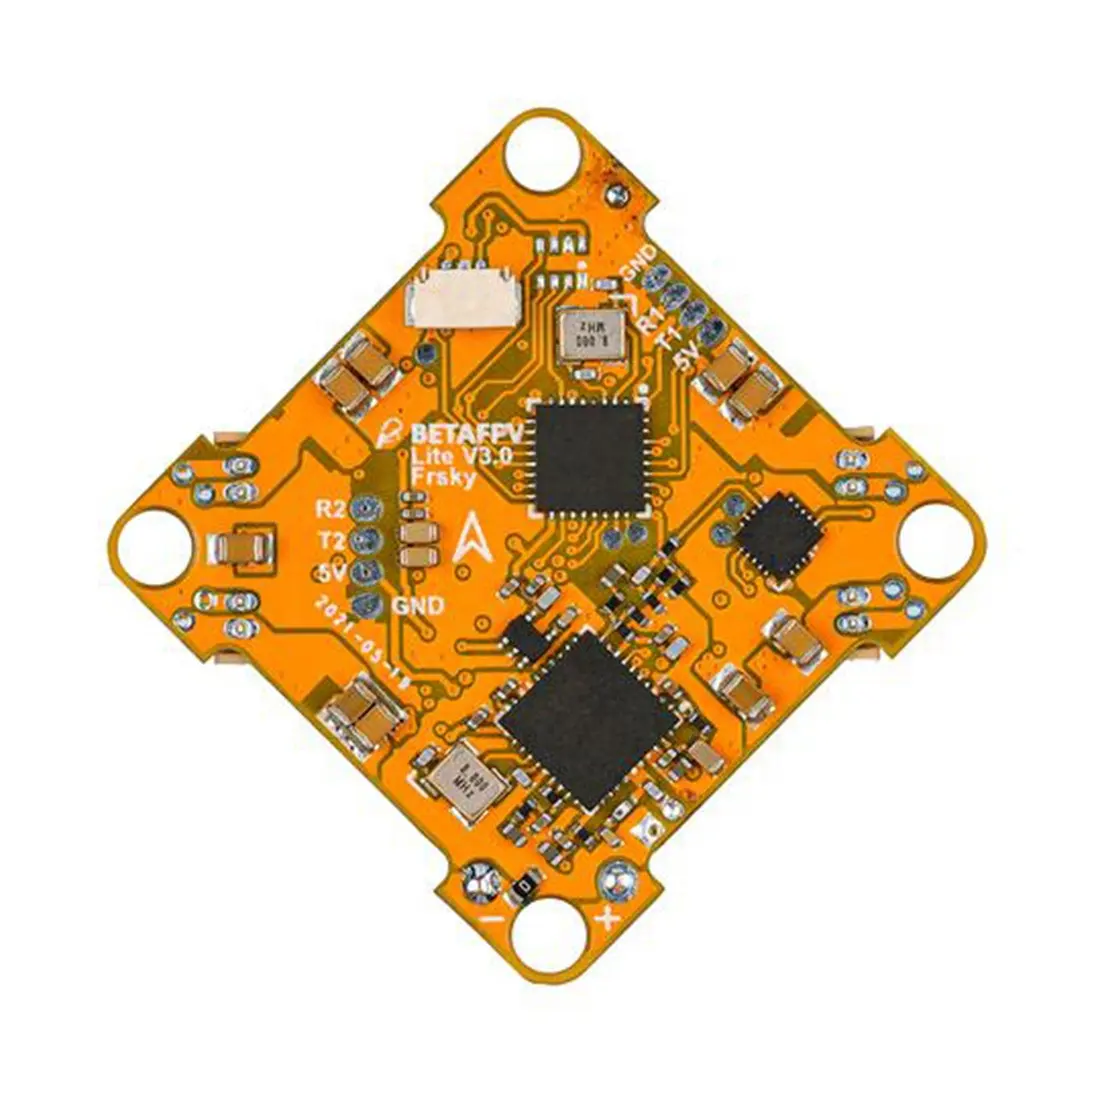 Suitable for DIY assembly aircraft BETAFPV Lite Flight Controller V3 Built-in SPI Frsky receiver Comes with D8 protocol